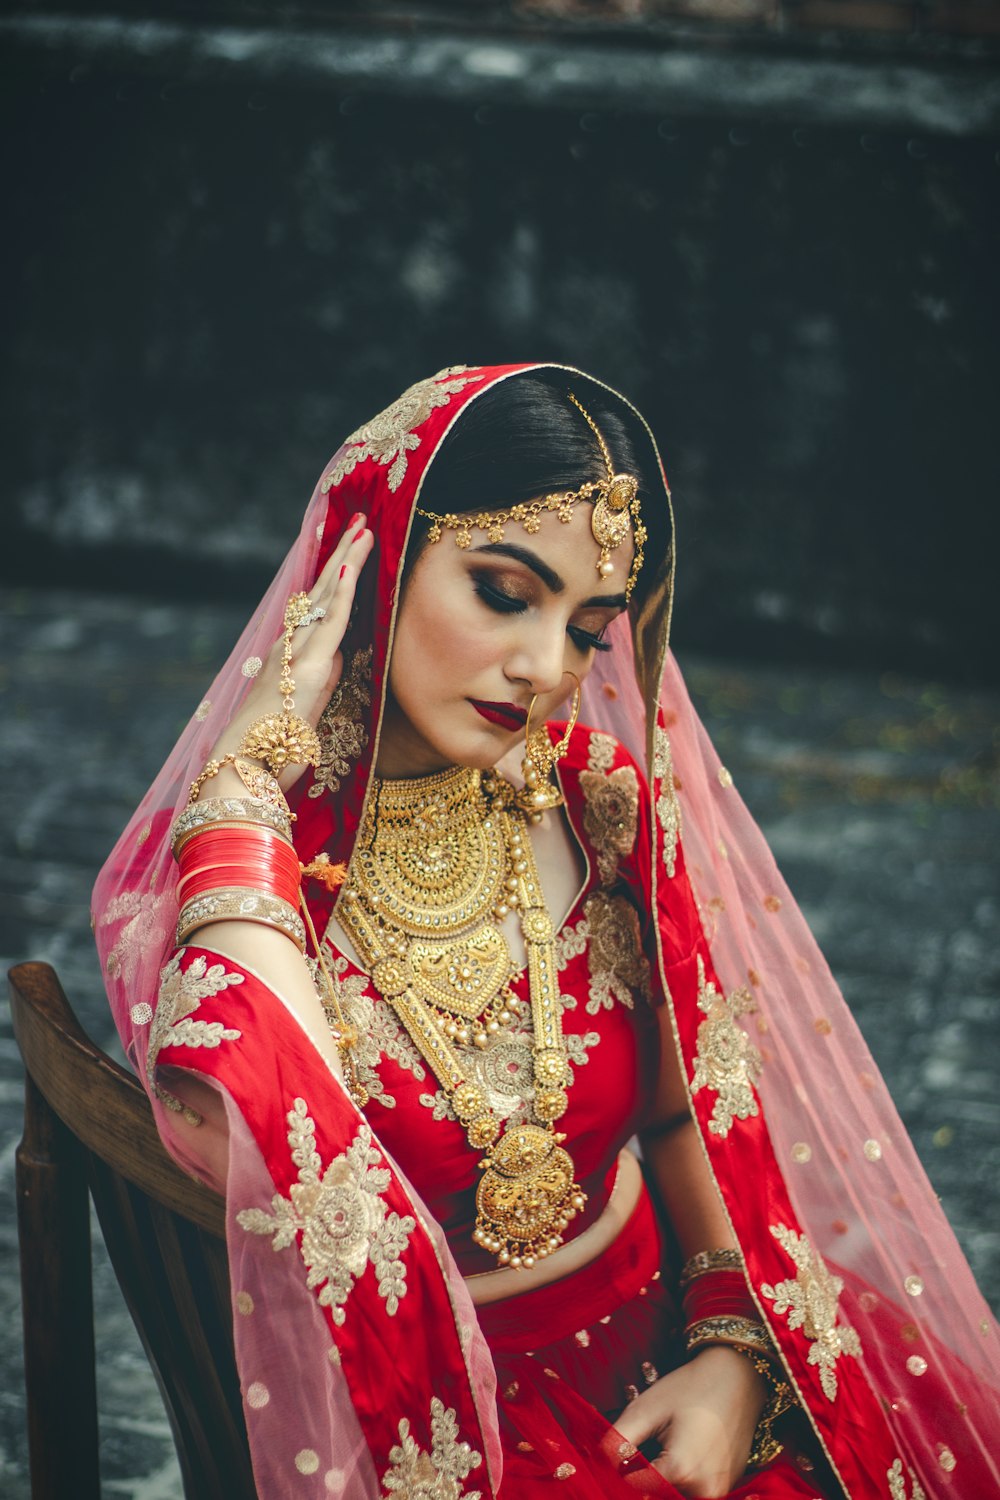 woman wearing wedding sari looking downwards